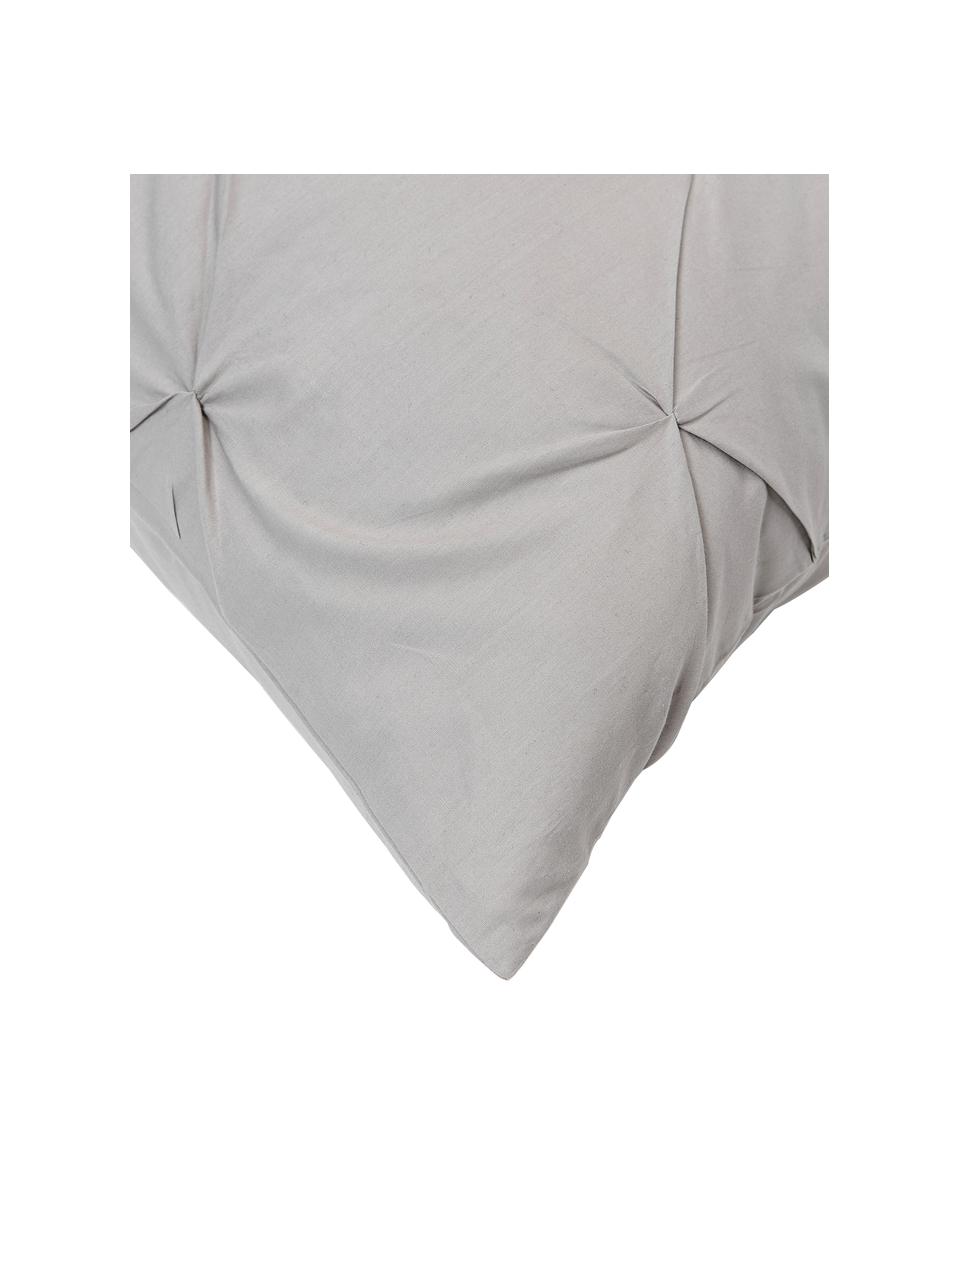 Baumwollperkal-Kopfkissenbezug Brody mit Steppmuster in Origami-Optik, Webart: Perkal Fadendichte 200 TC, Grau, B 40 x L 80 cm